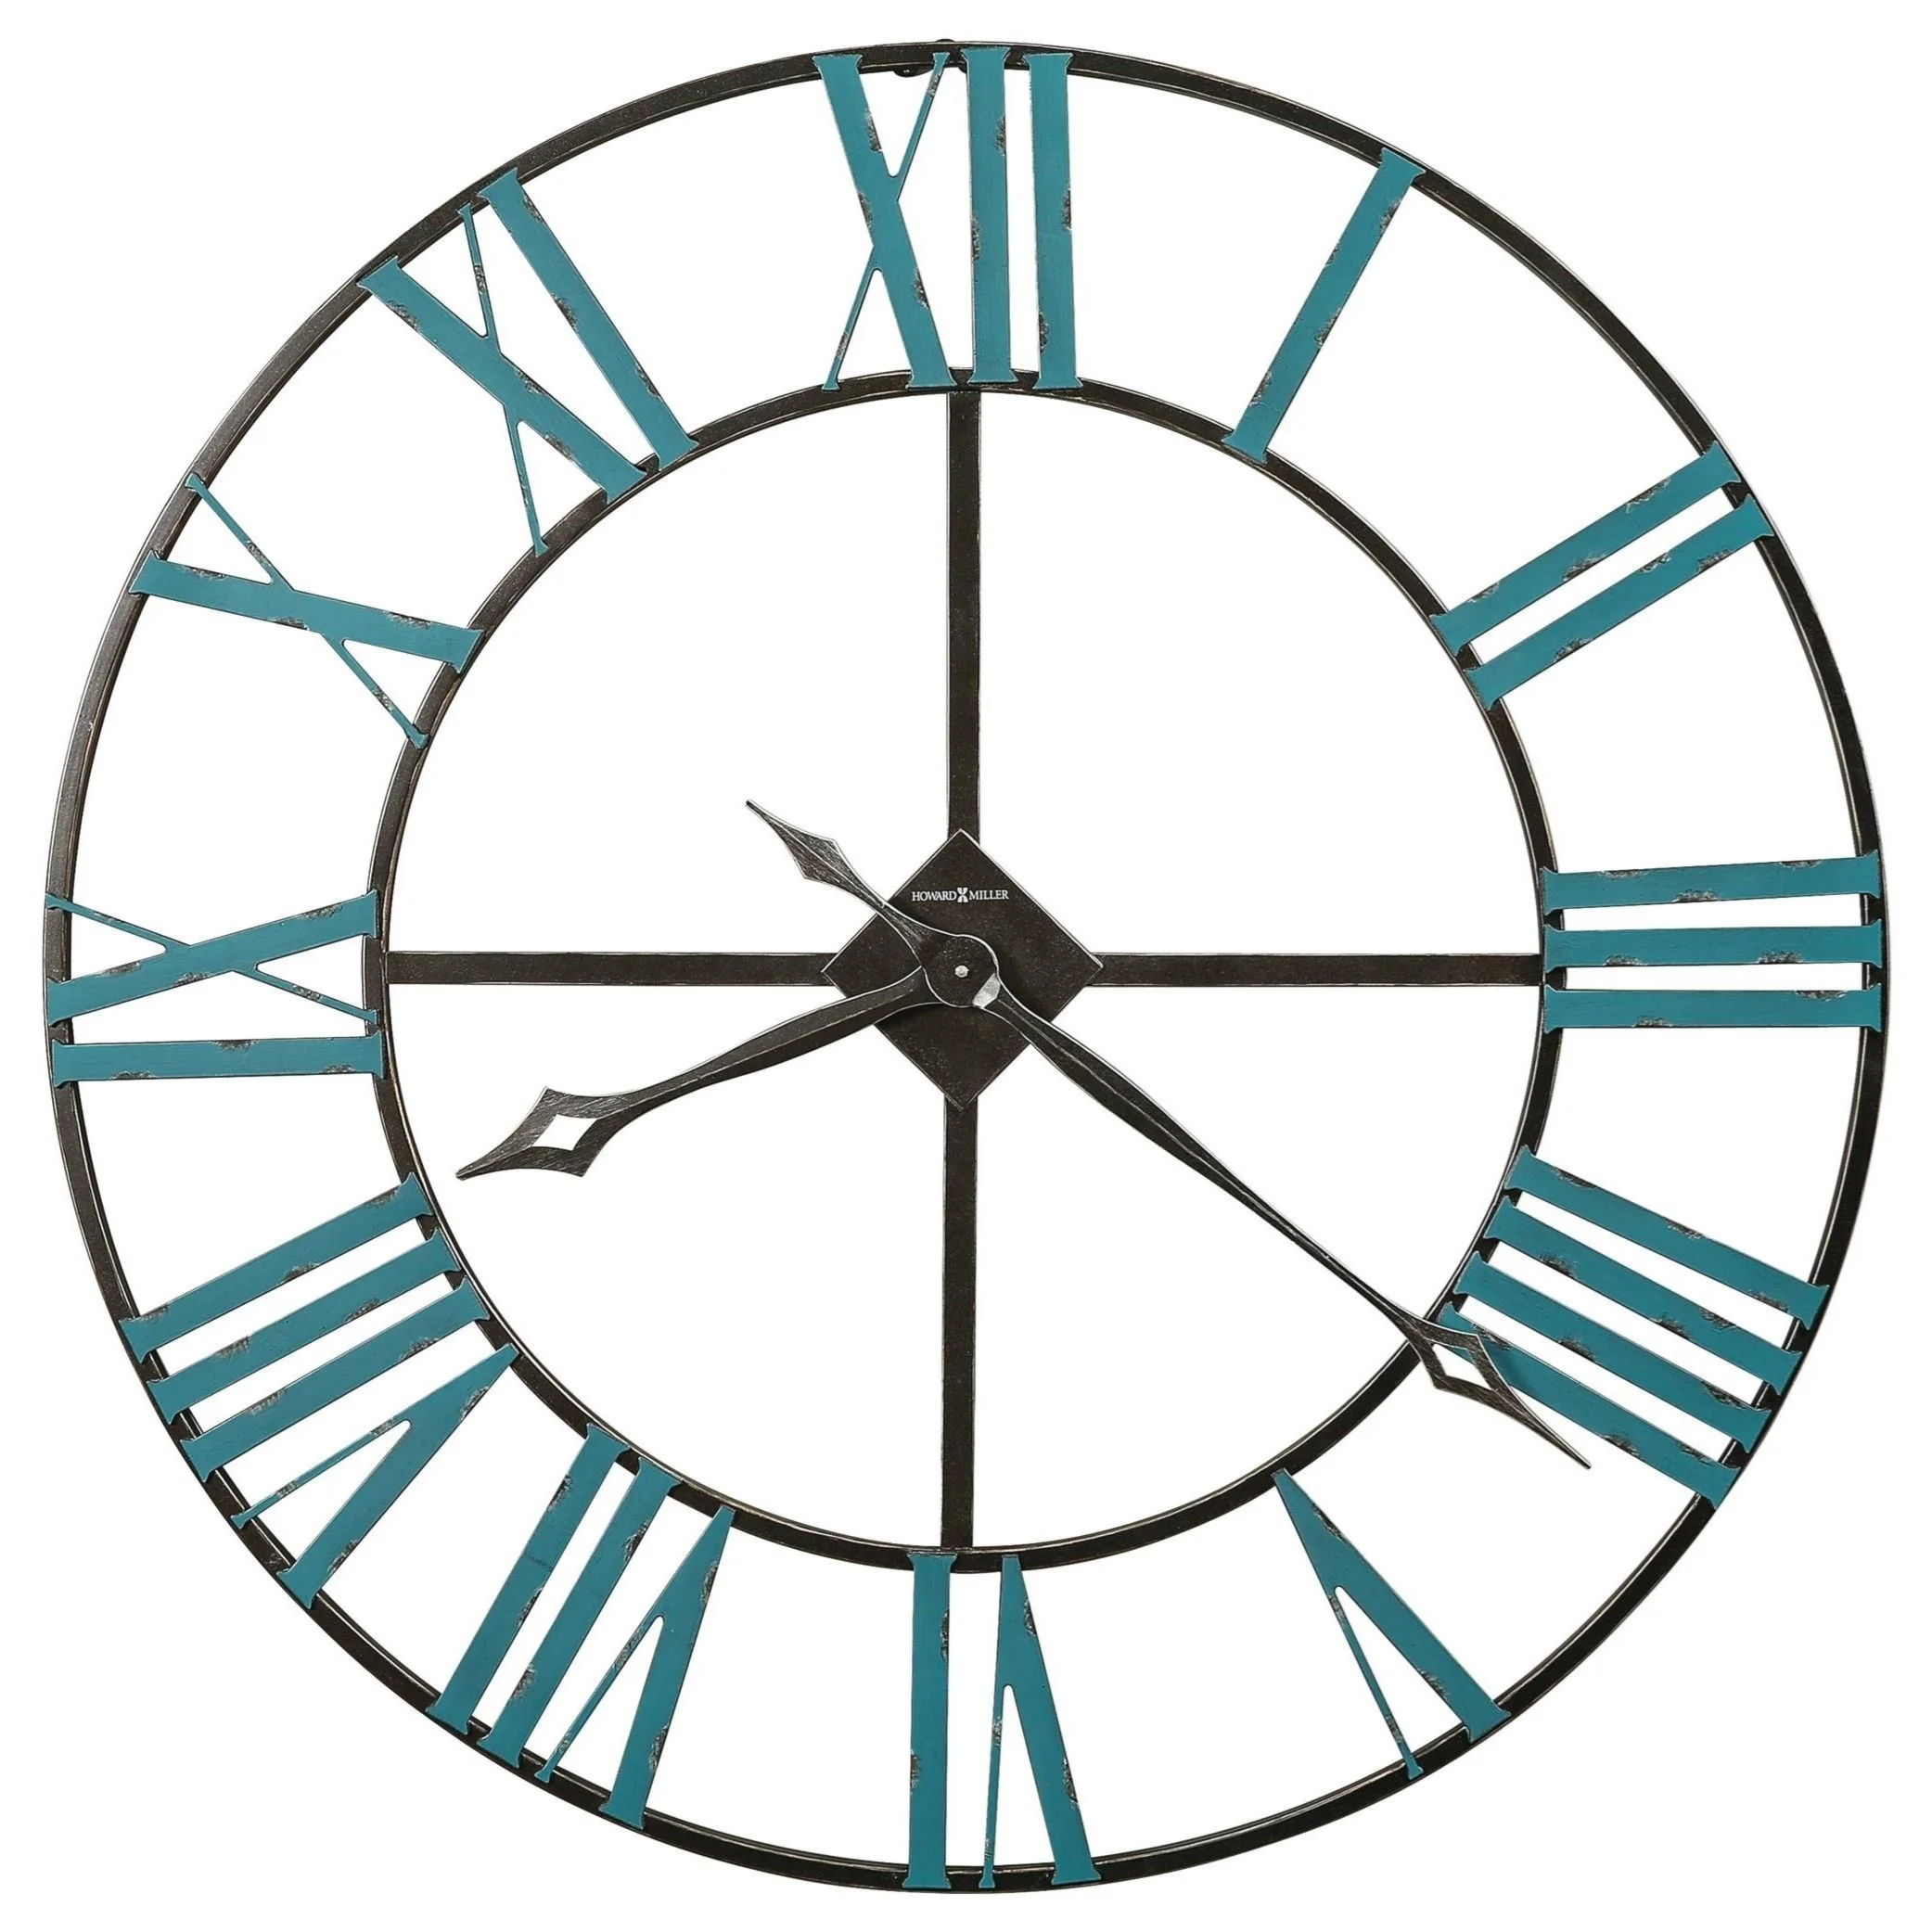 Howard Miller Wall Clocks 625-598 Back 40 Wall Clock